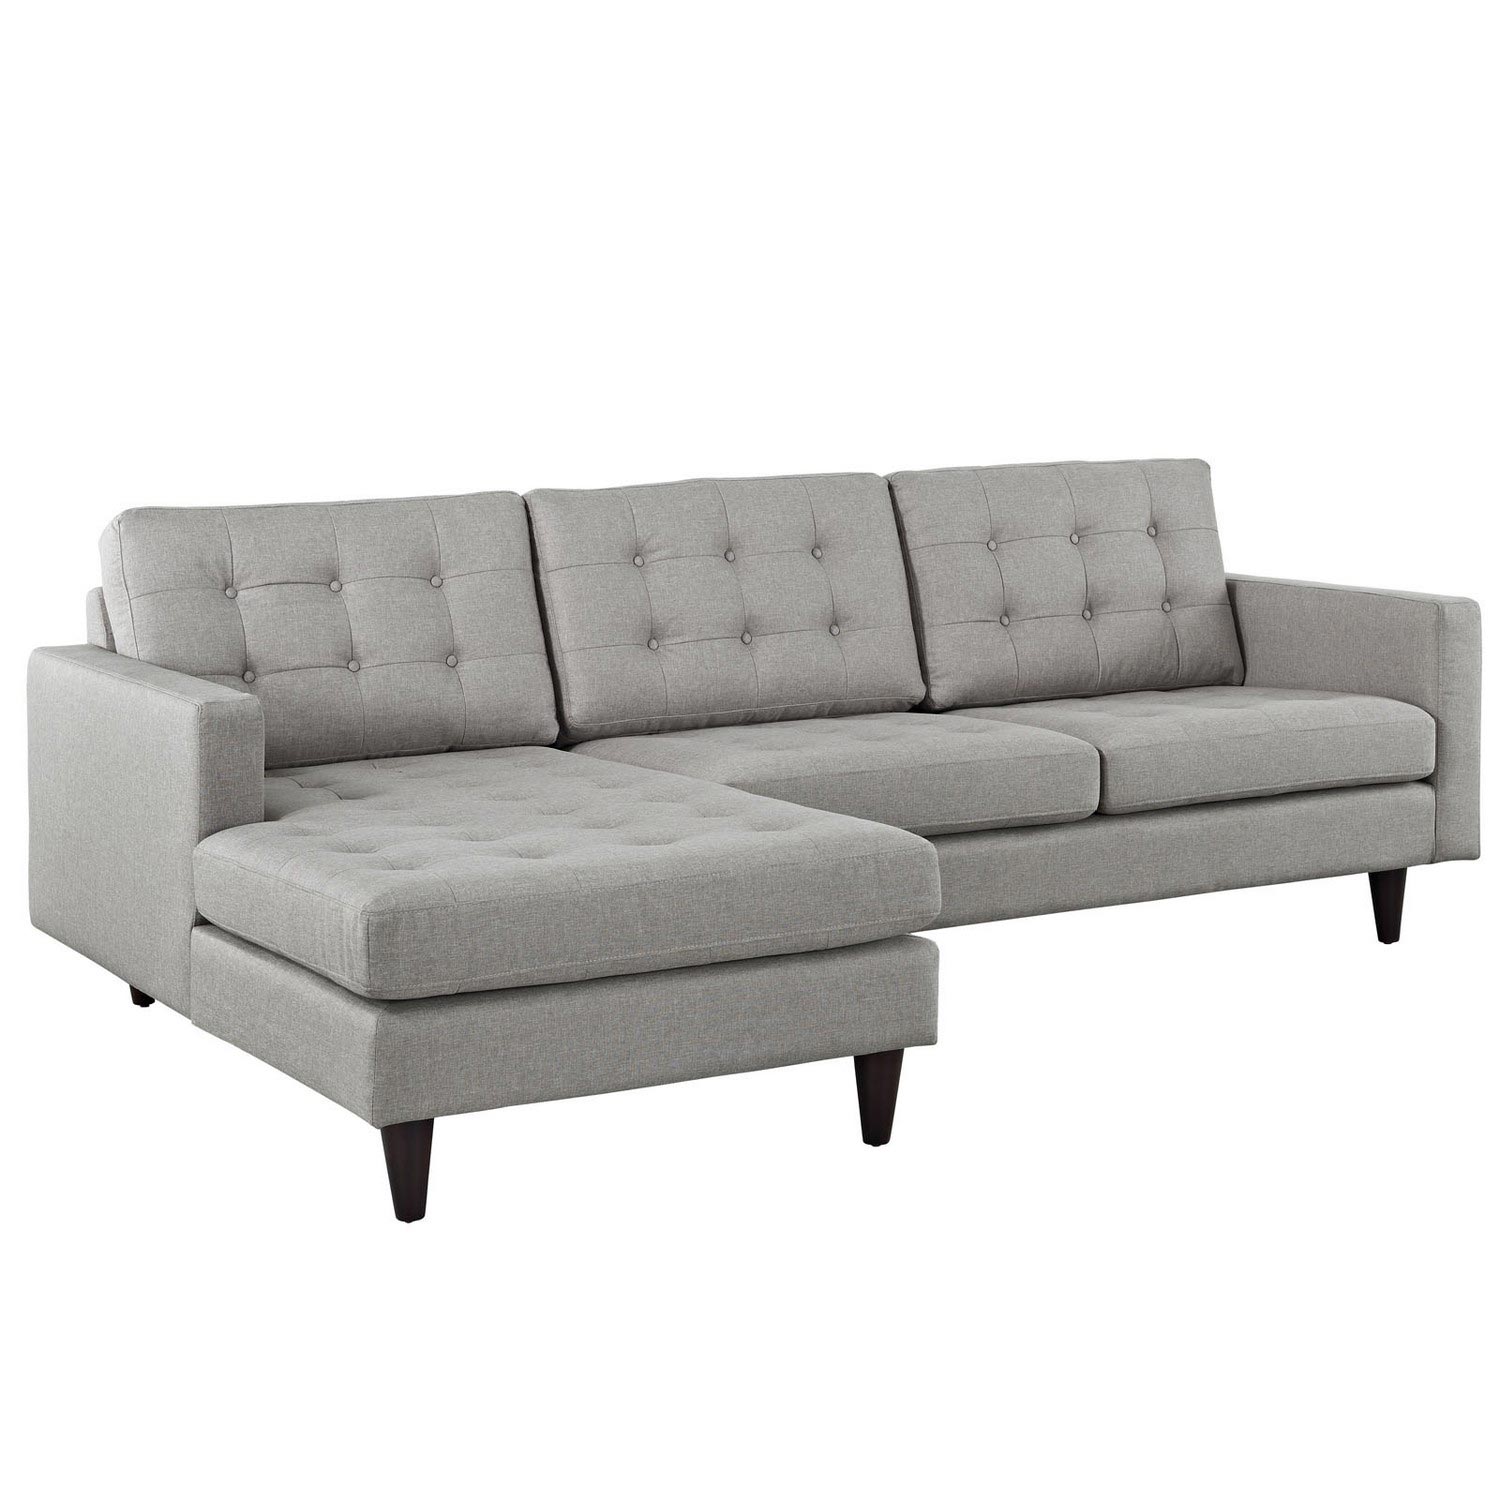 Modway Empress Left-Arm Sectional Sofa - Light Gray